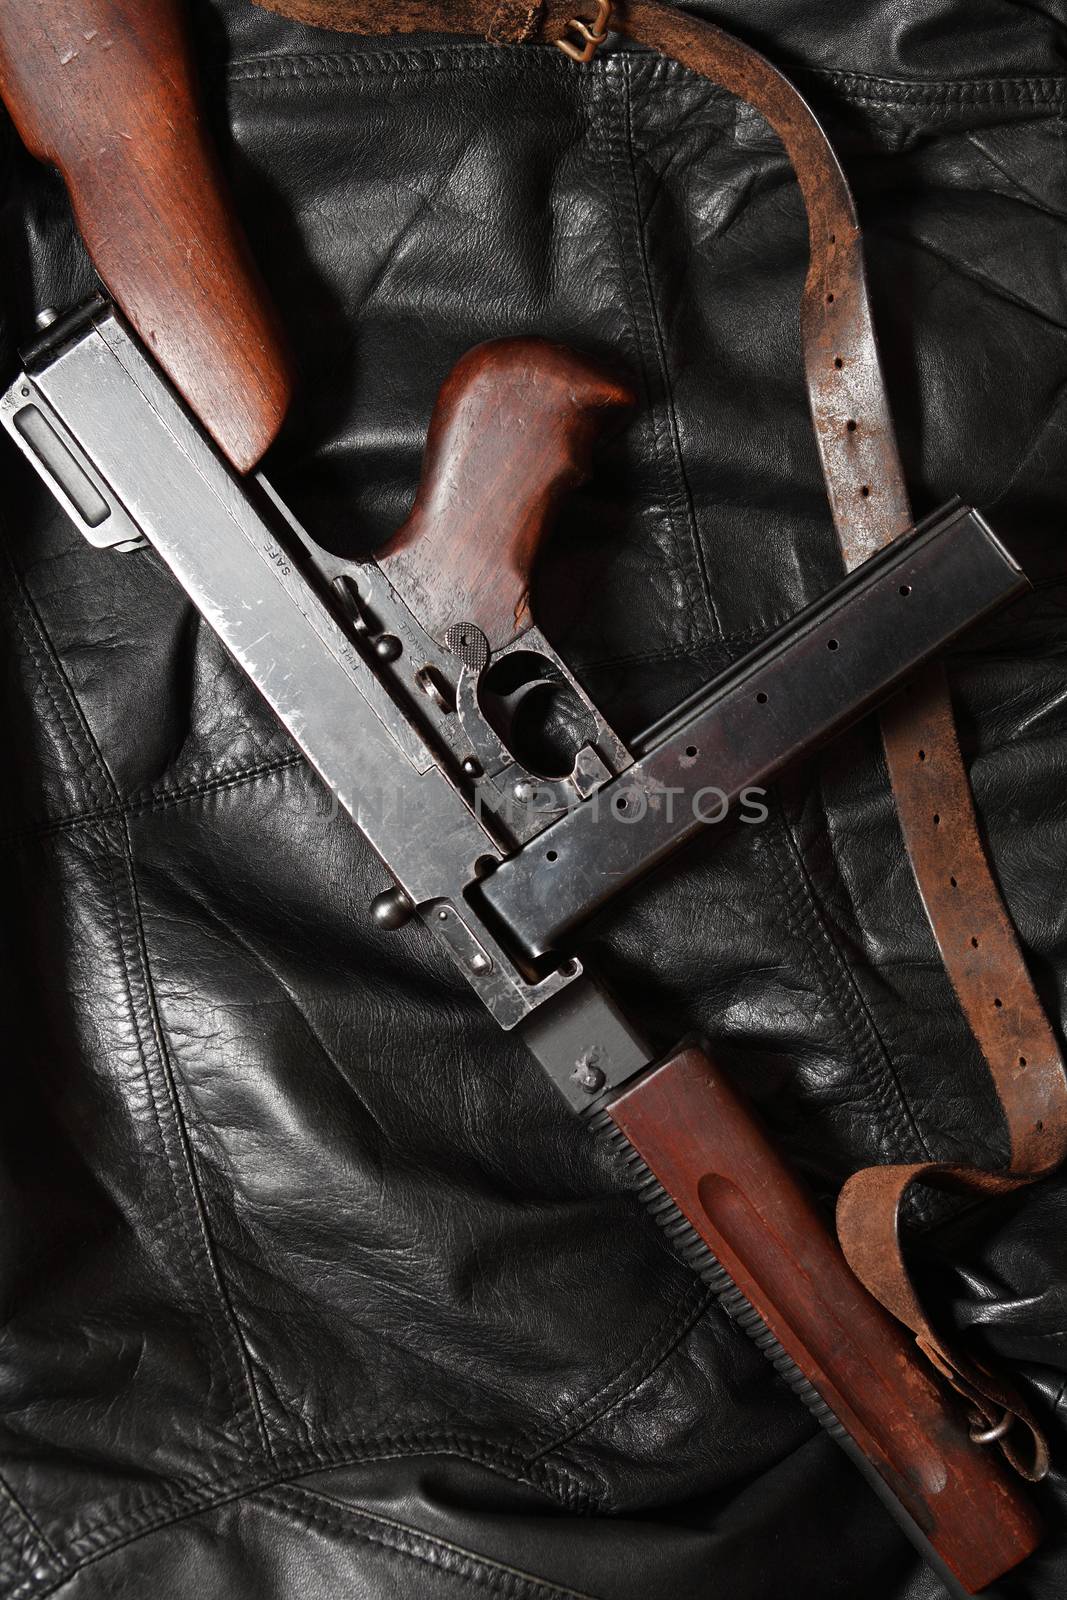 Old USA Submachine Gun by kvkirillov